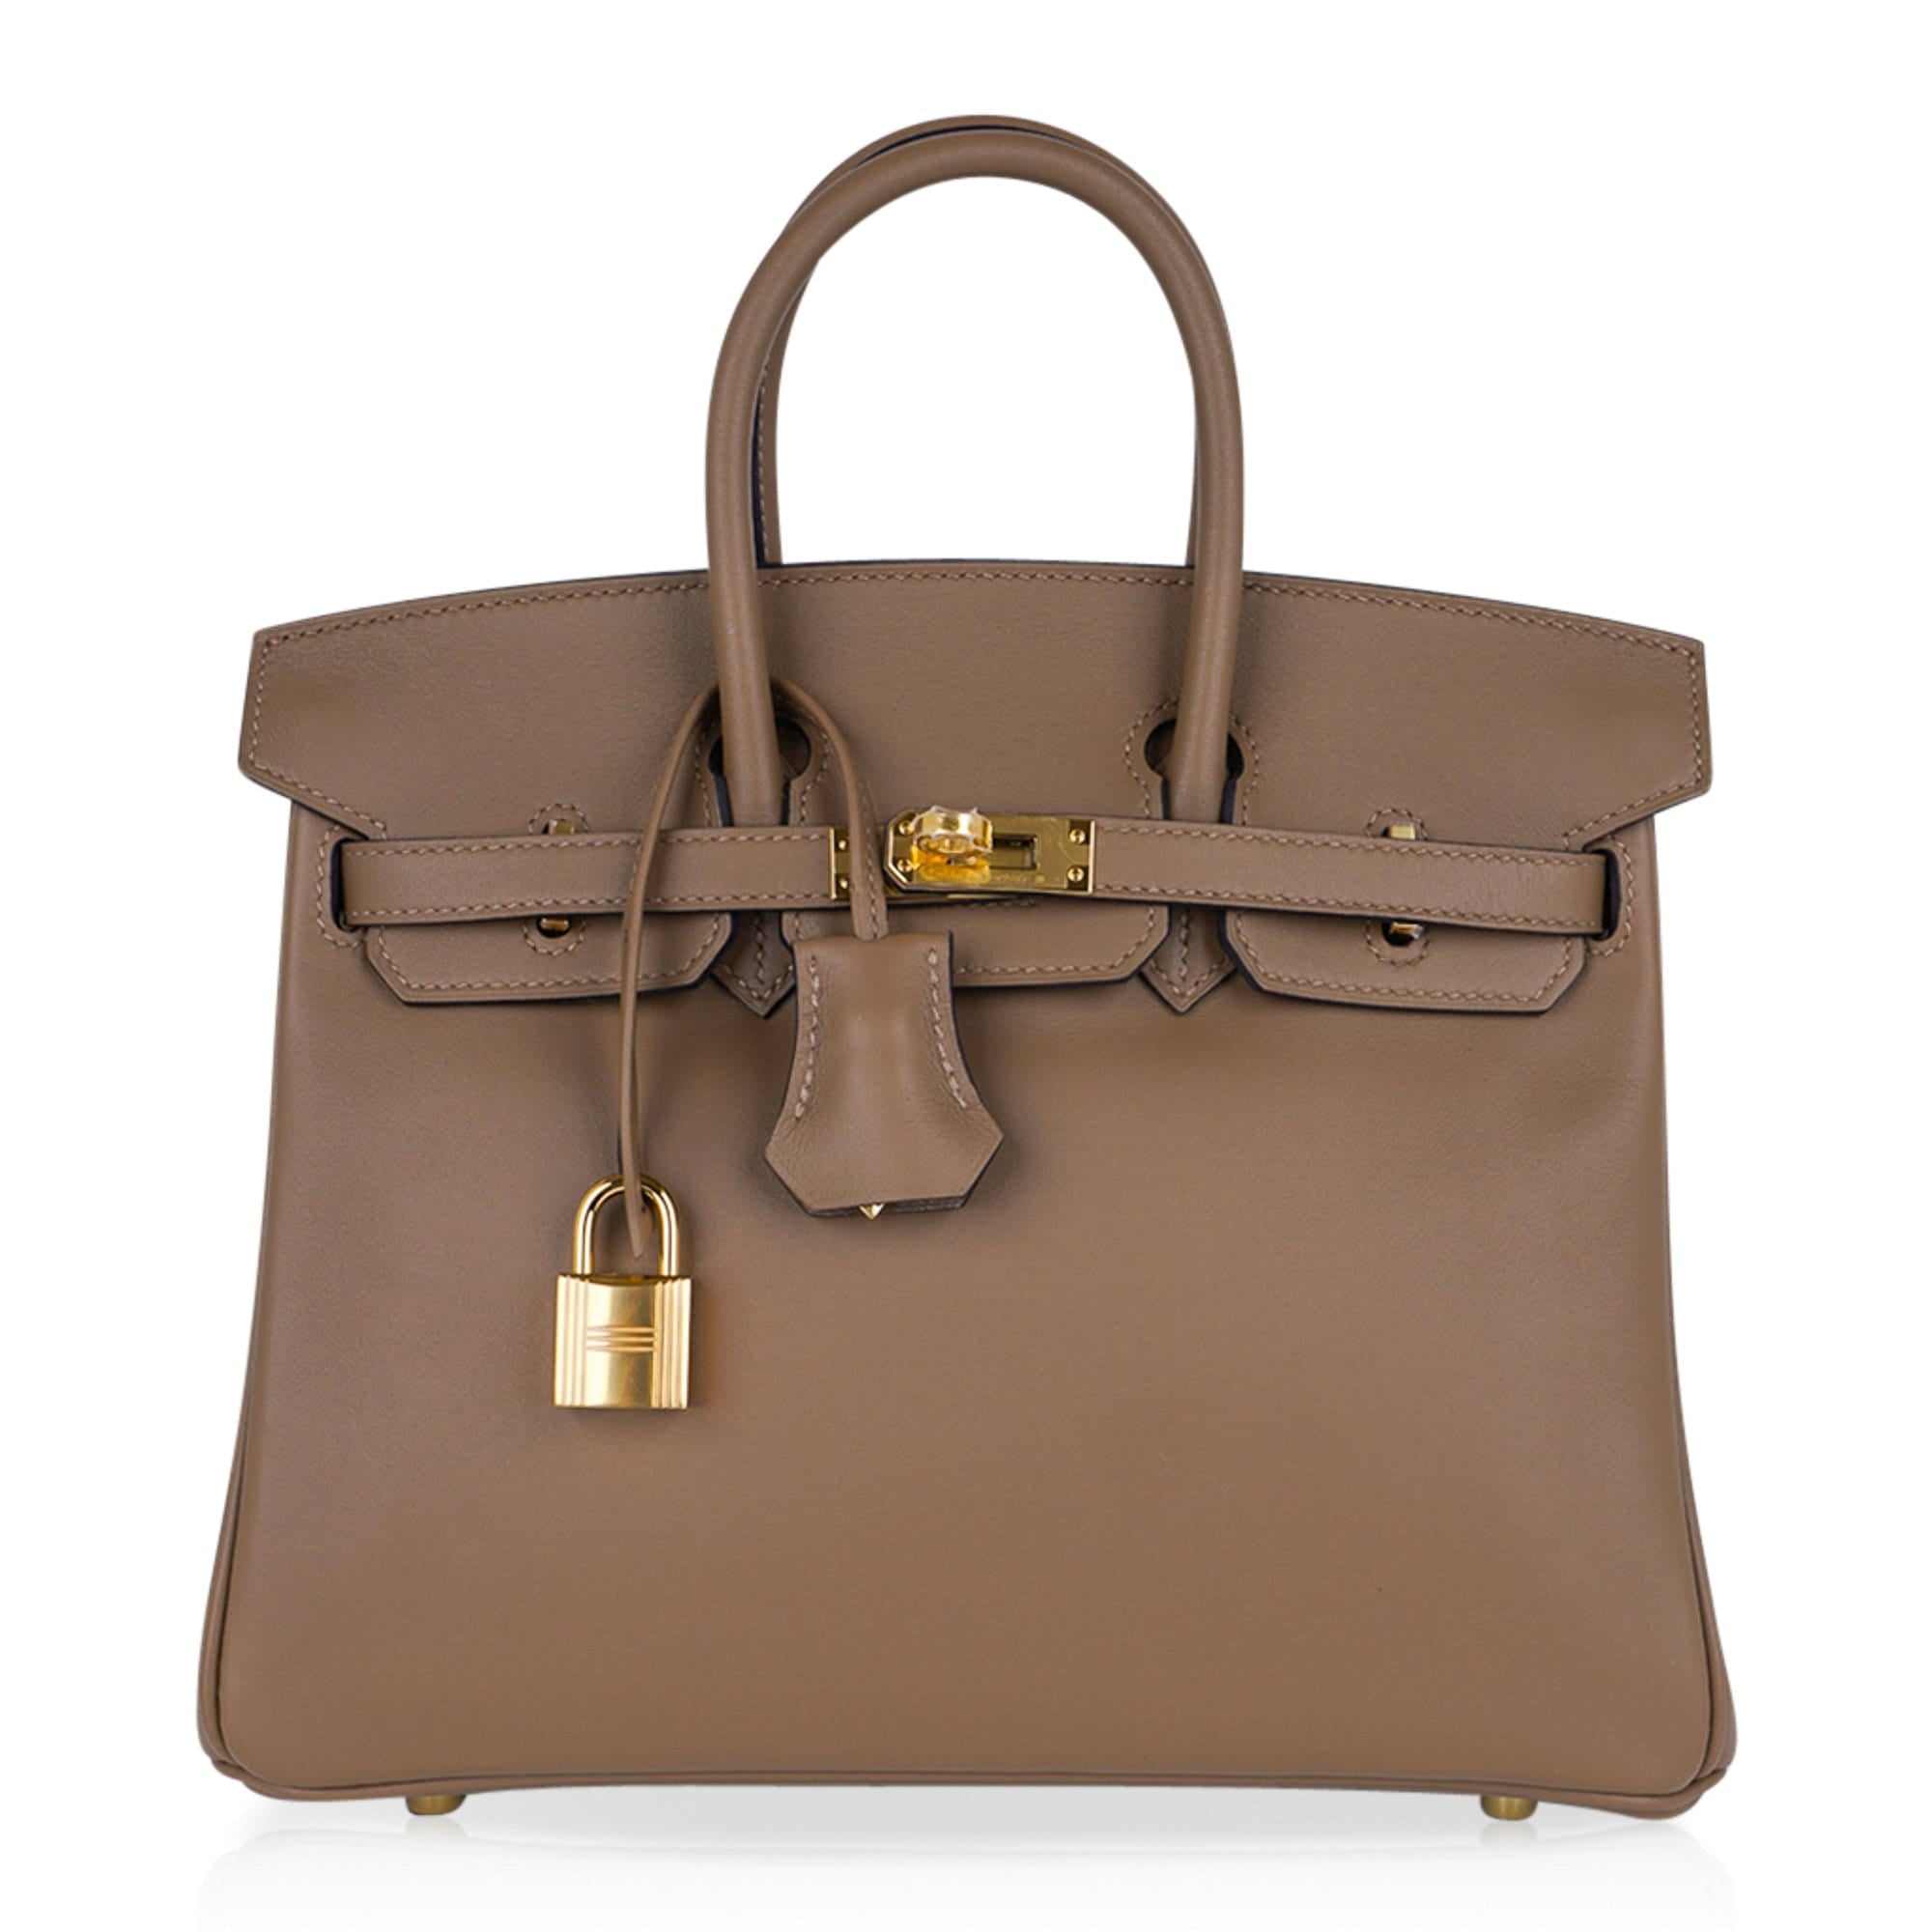 HERMÈS Birkin 25 handbag in Craie Jonathan leather with Gold